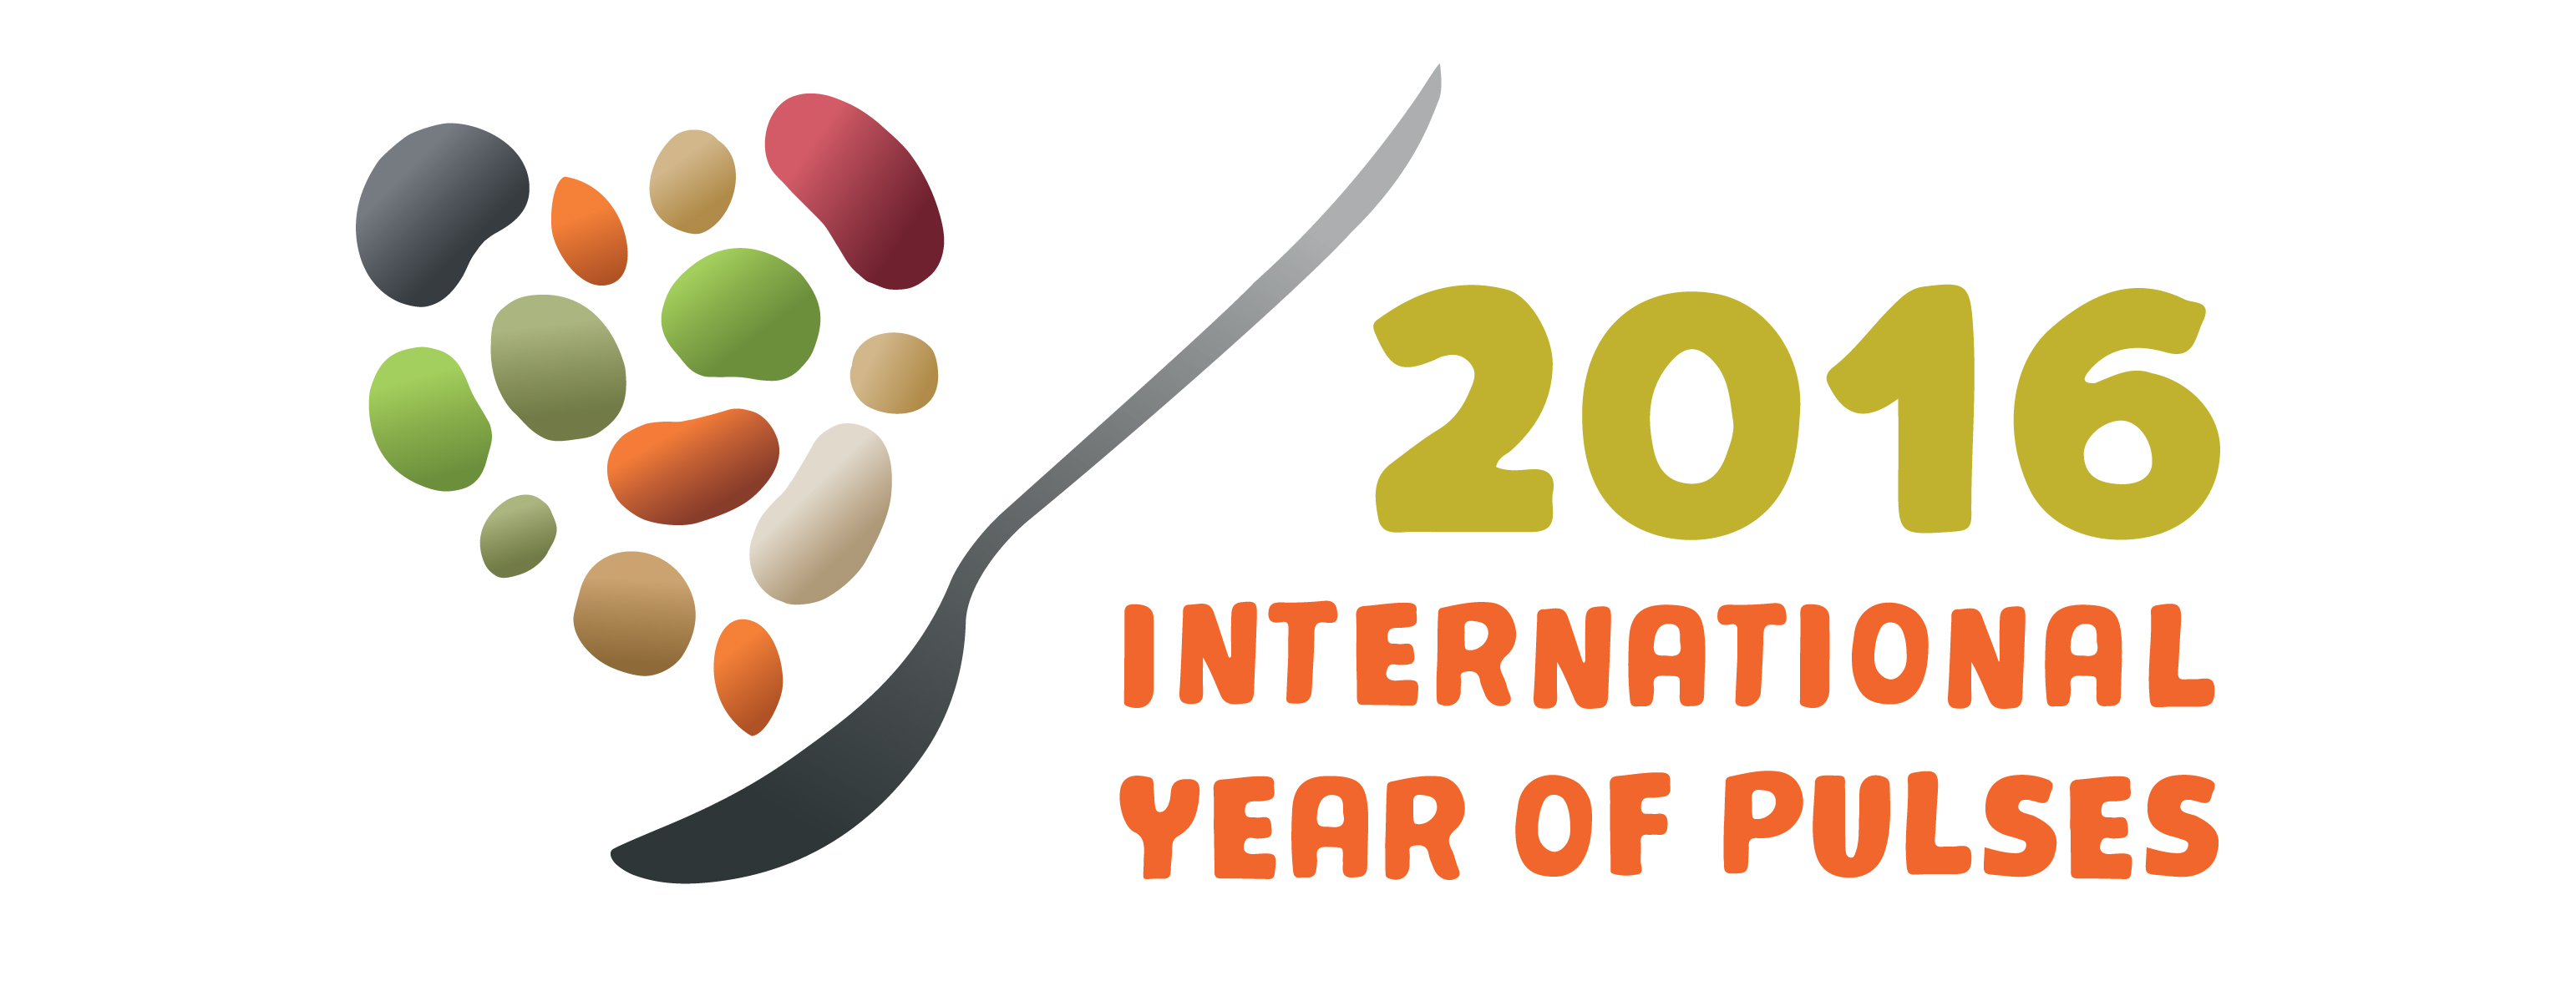 2016 International Year of Pulses logo